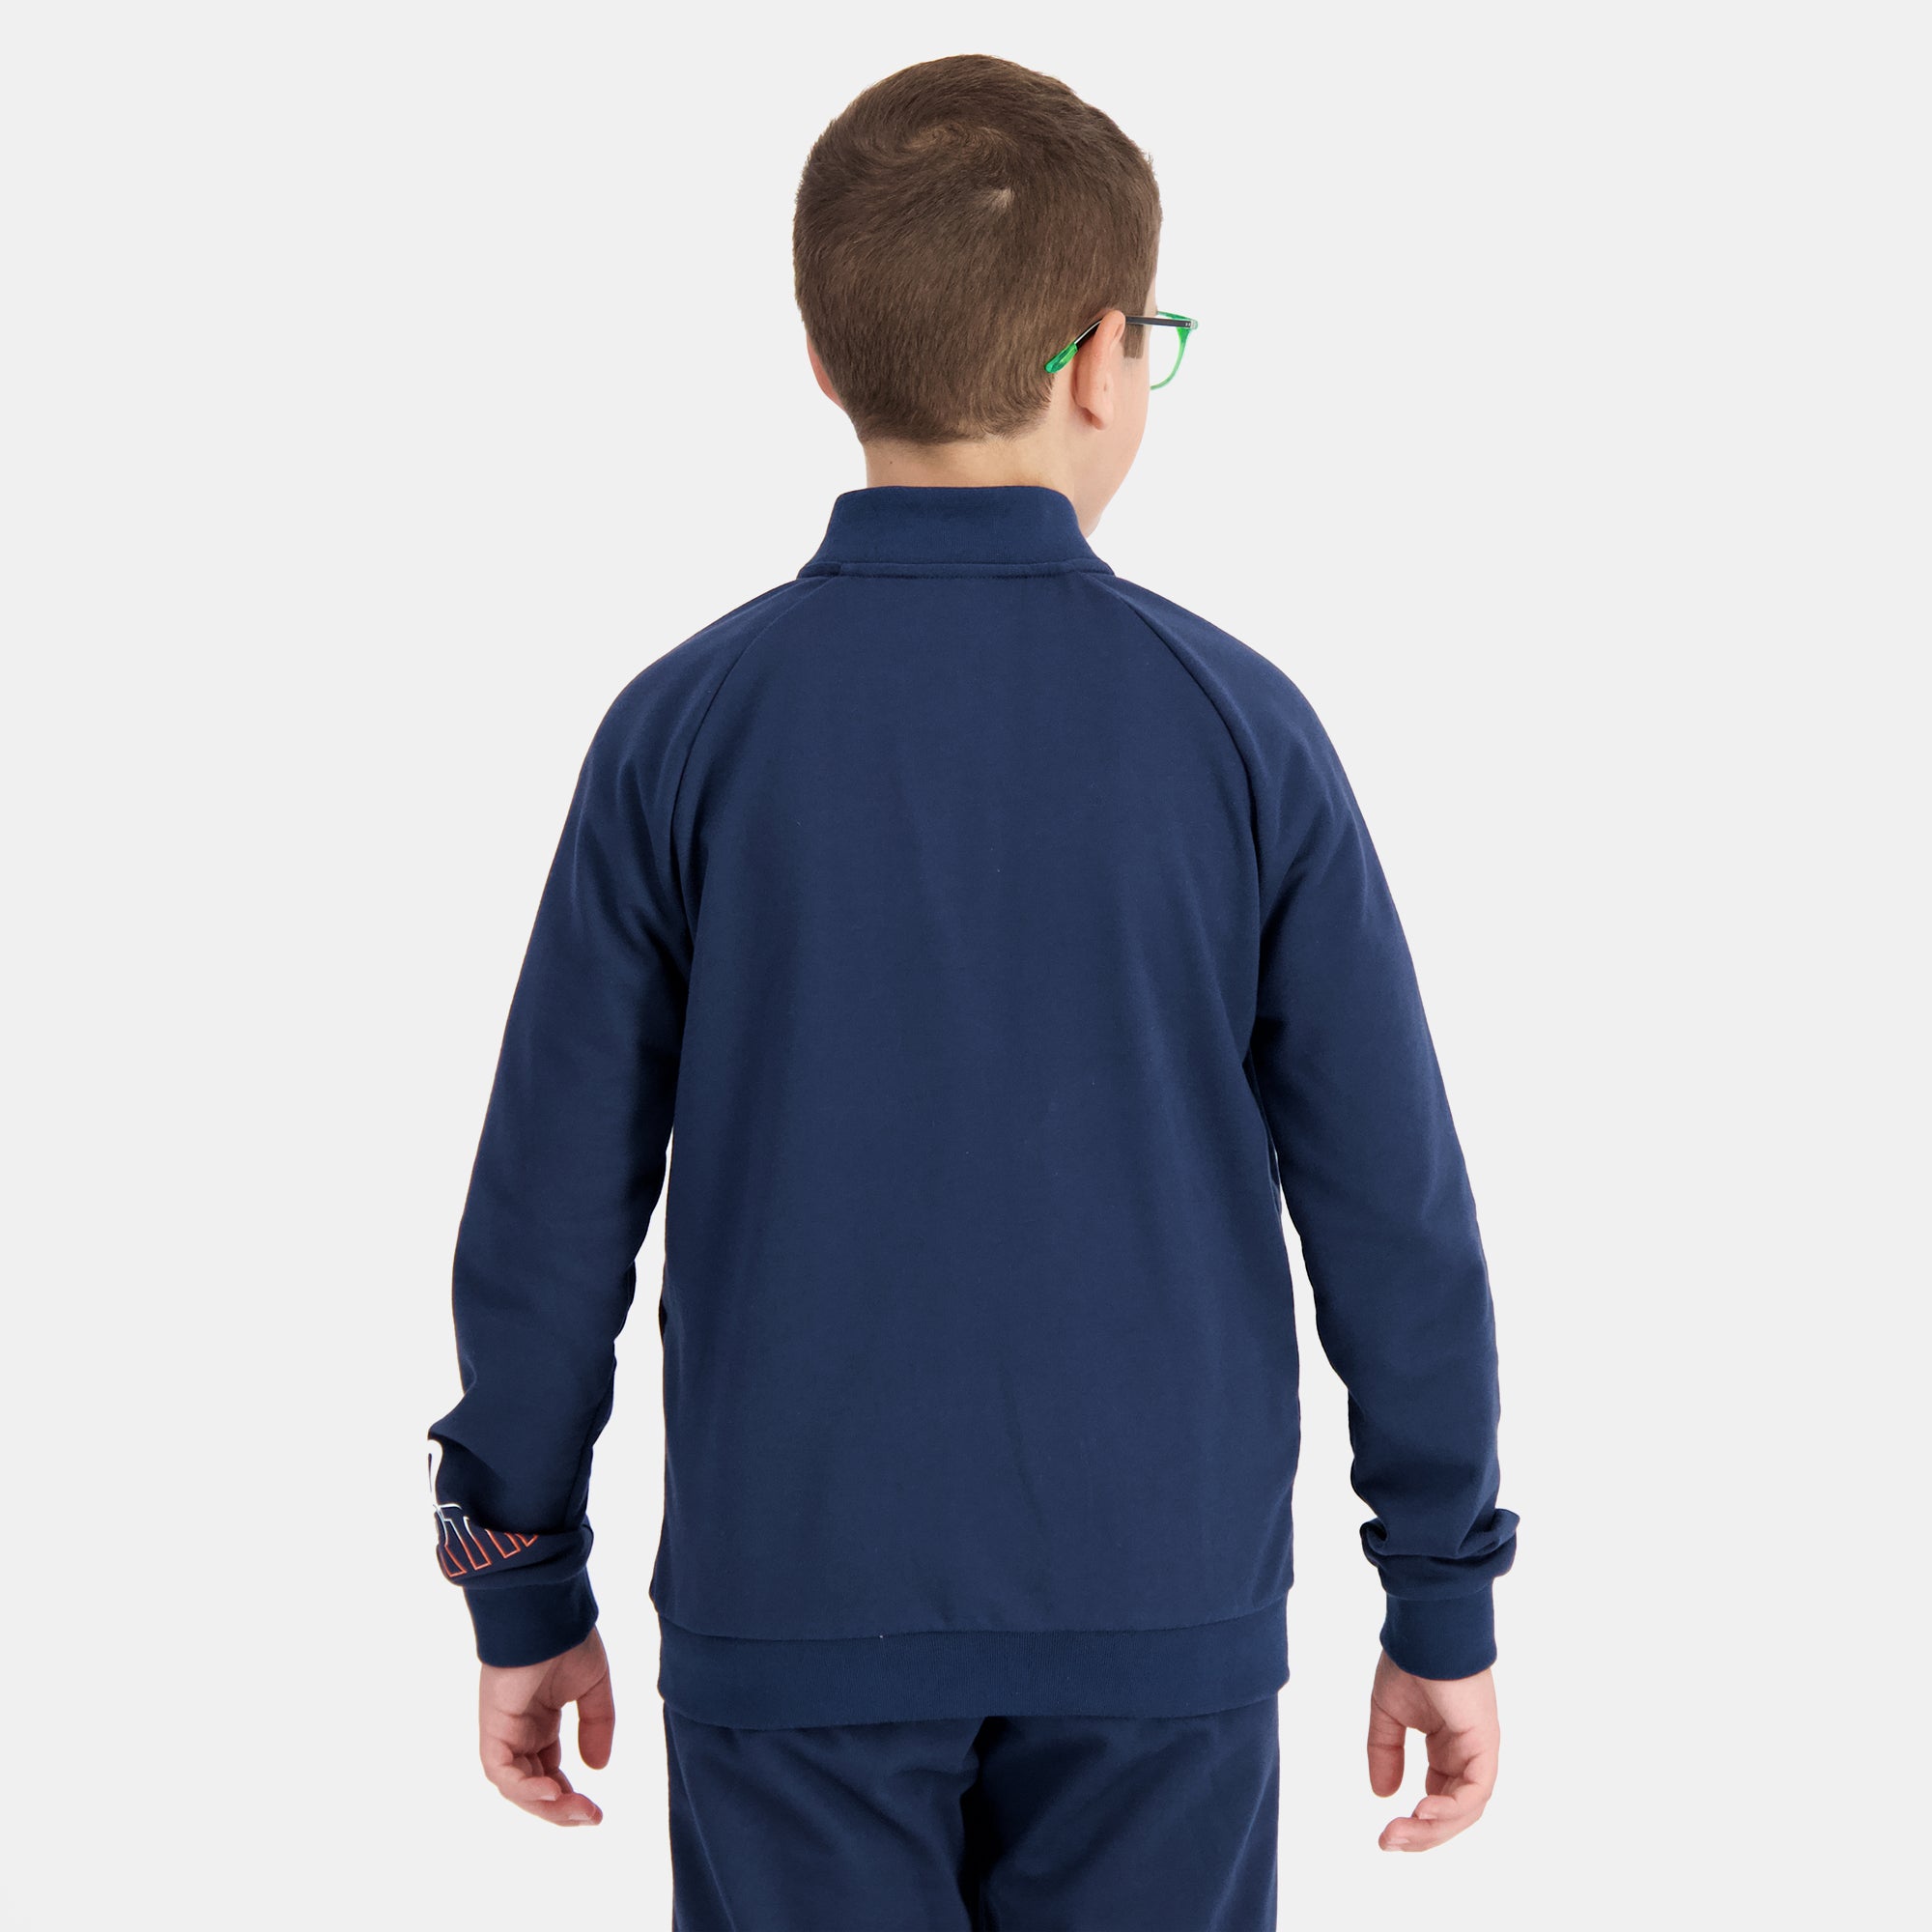 2410129-SAISON 2 FZ Sweat N°1 Enfant dress blues  | Sweatshirt for kids